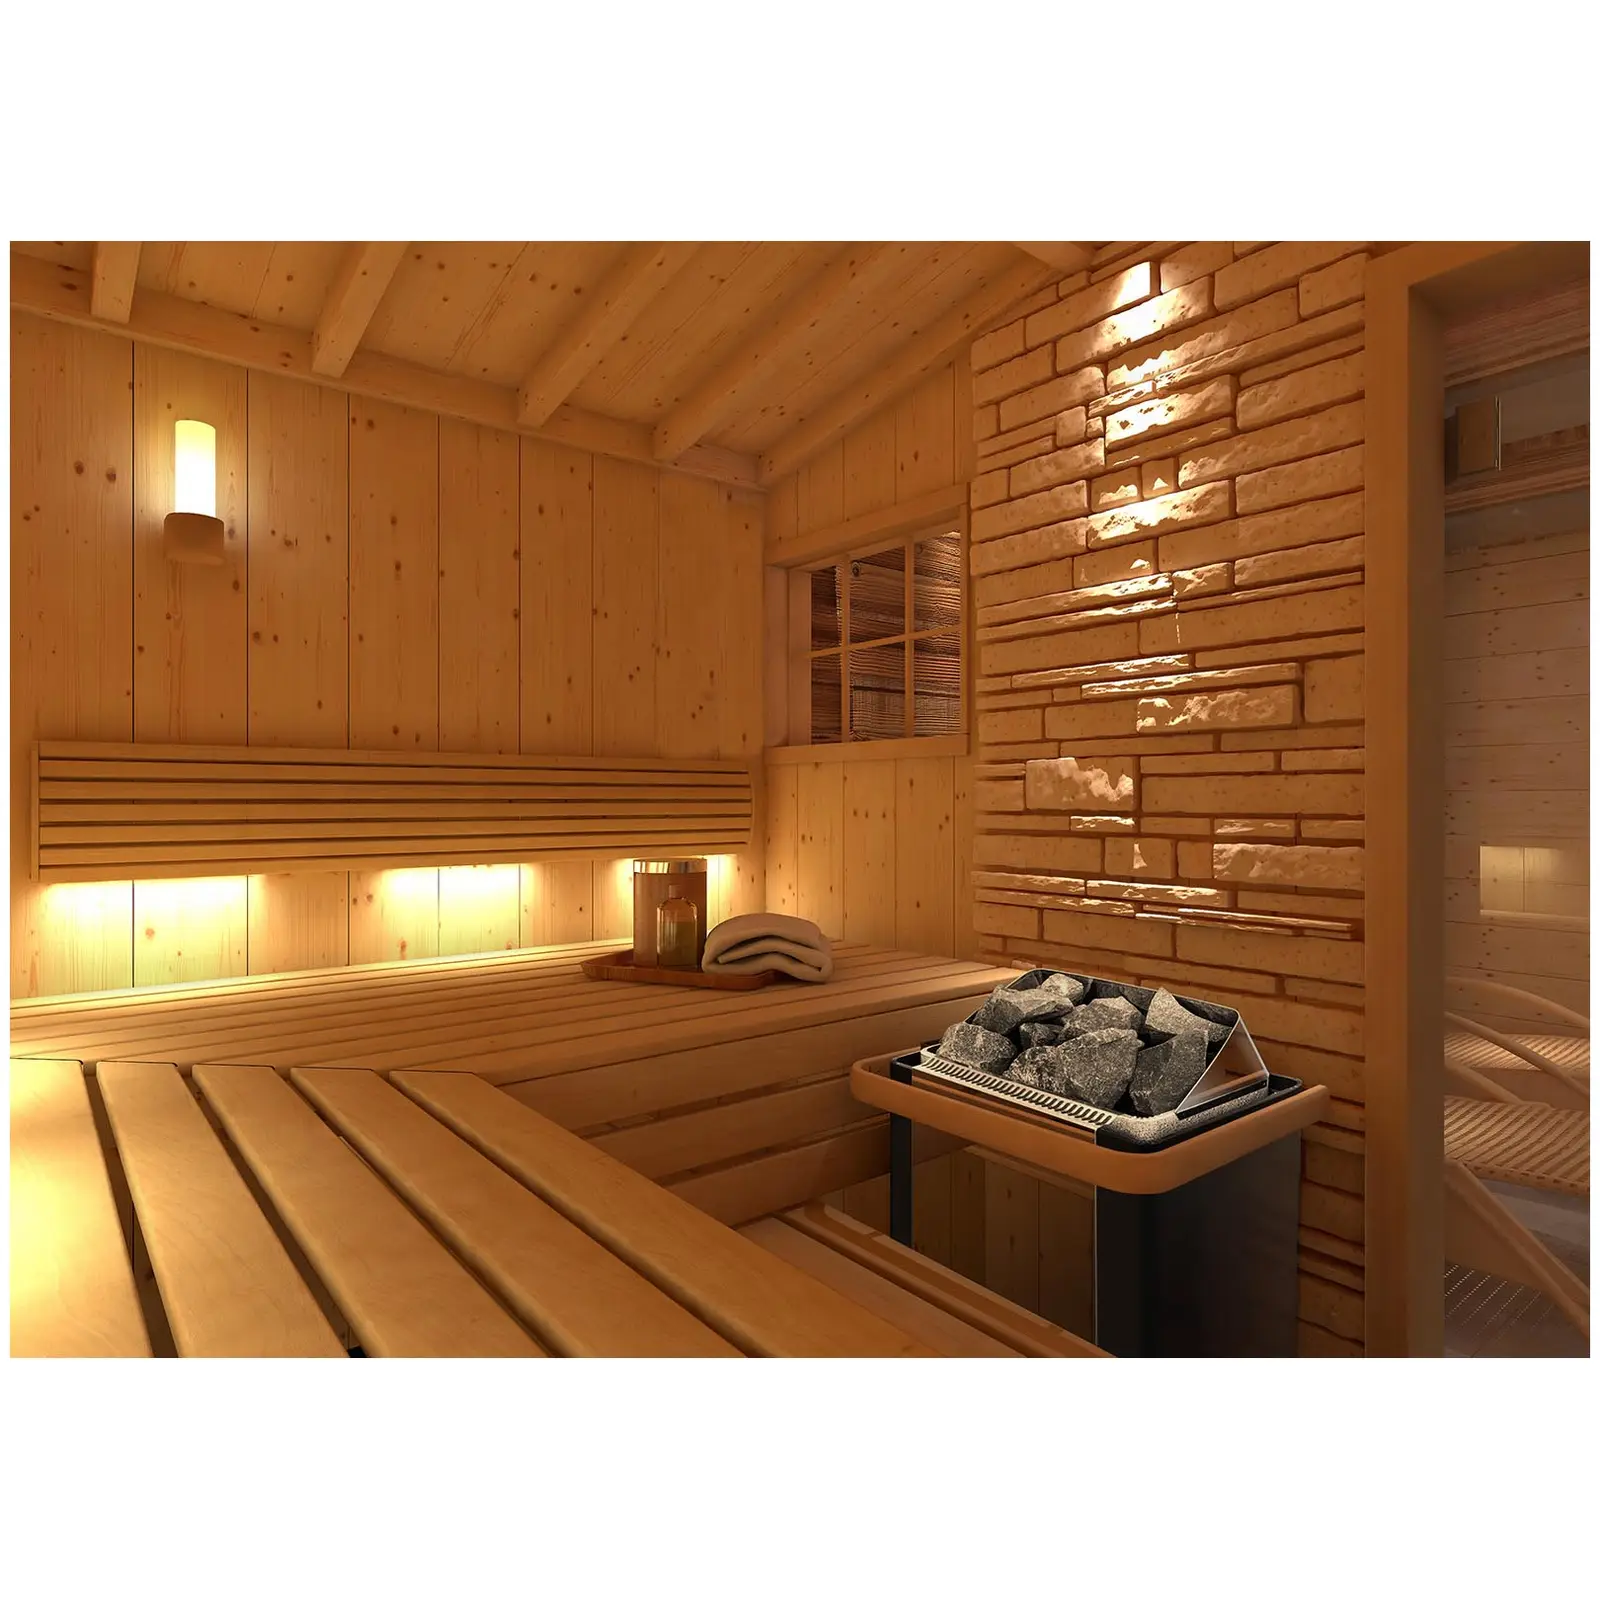 Aquecedor para sauna - elétrico - 9 kW